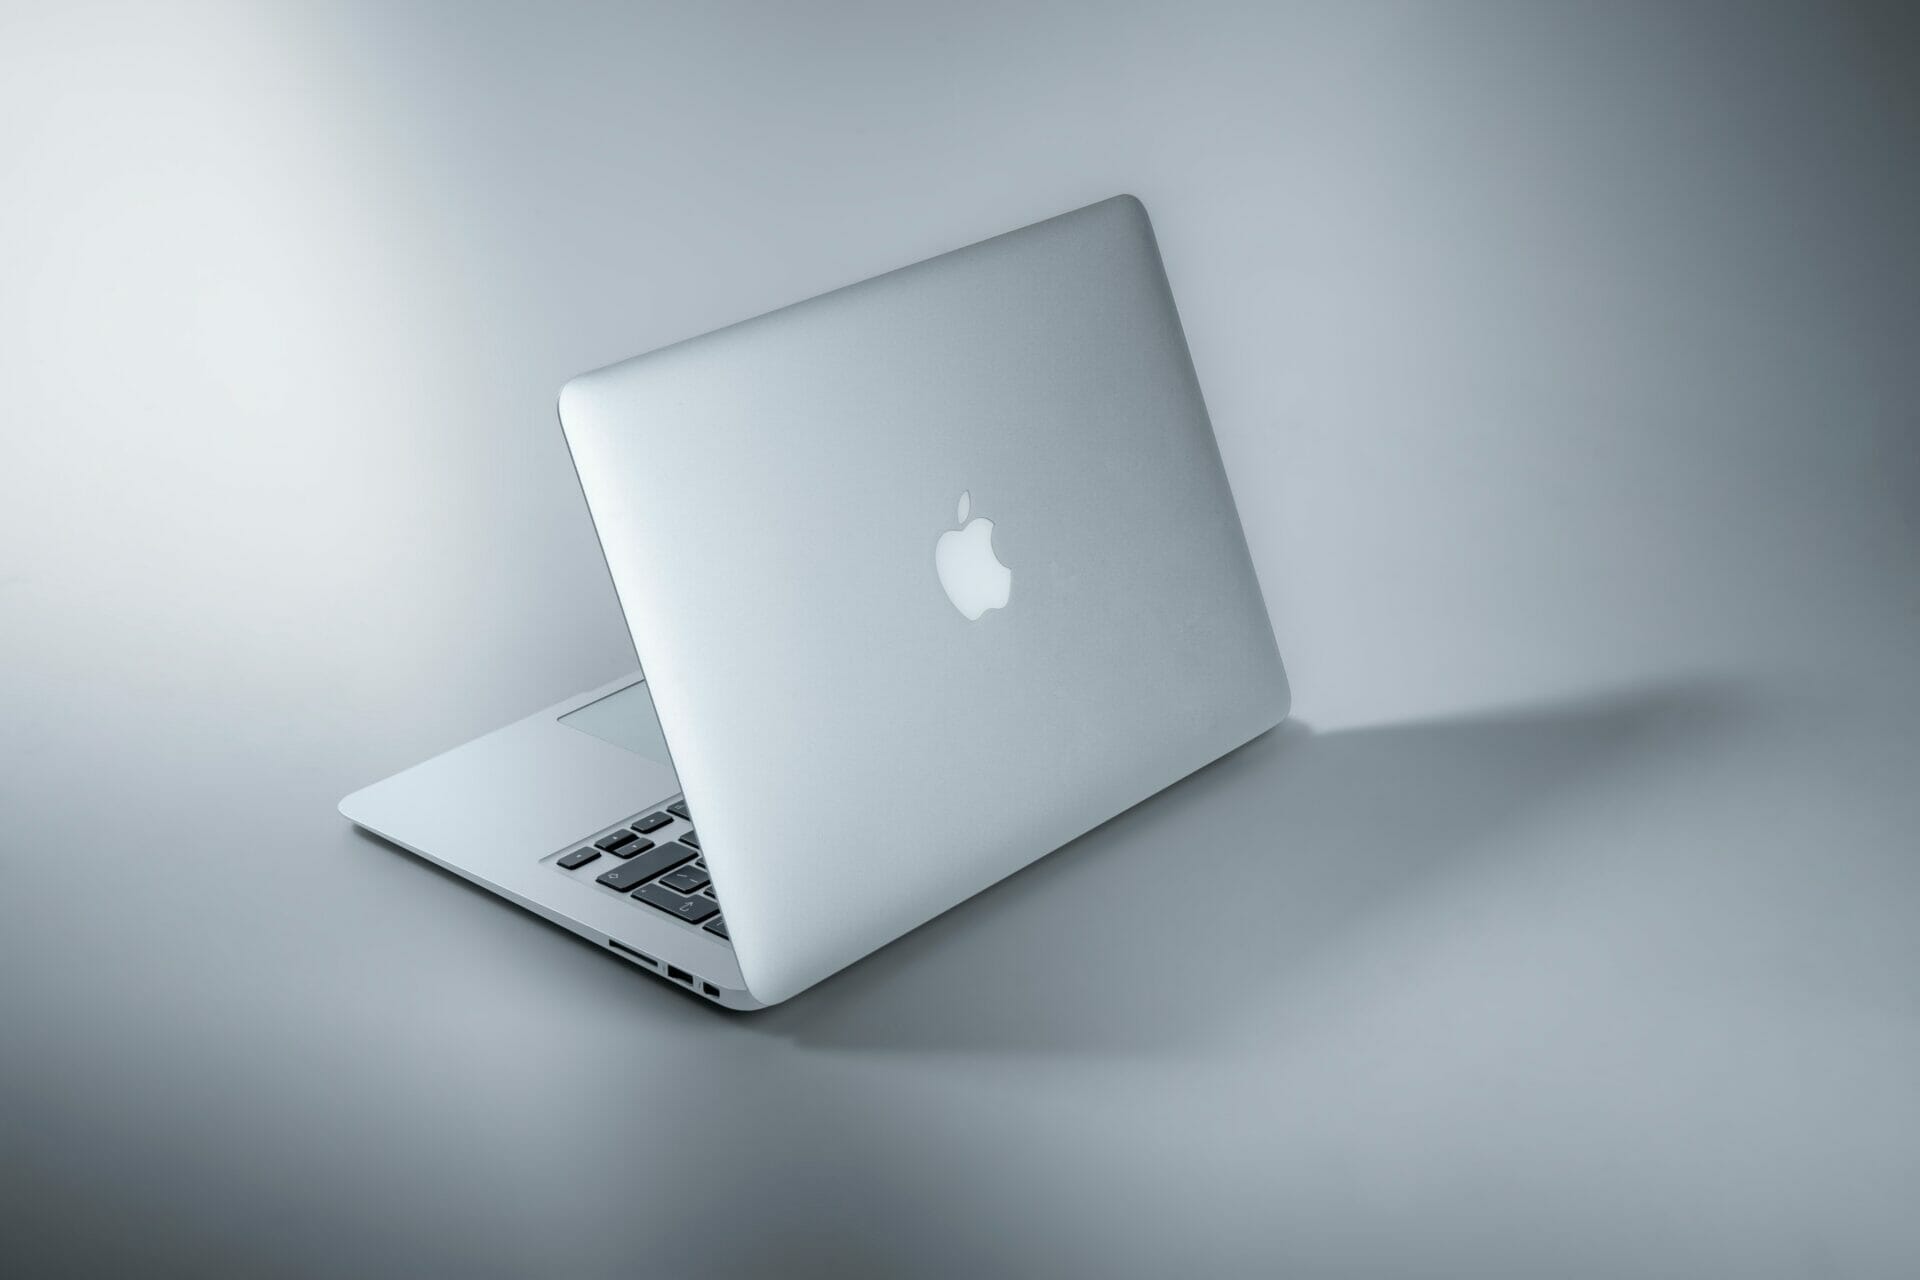 How to shutdown macbook pro with keyboard